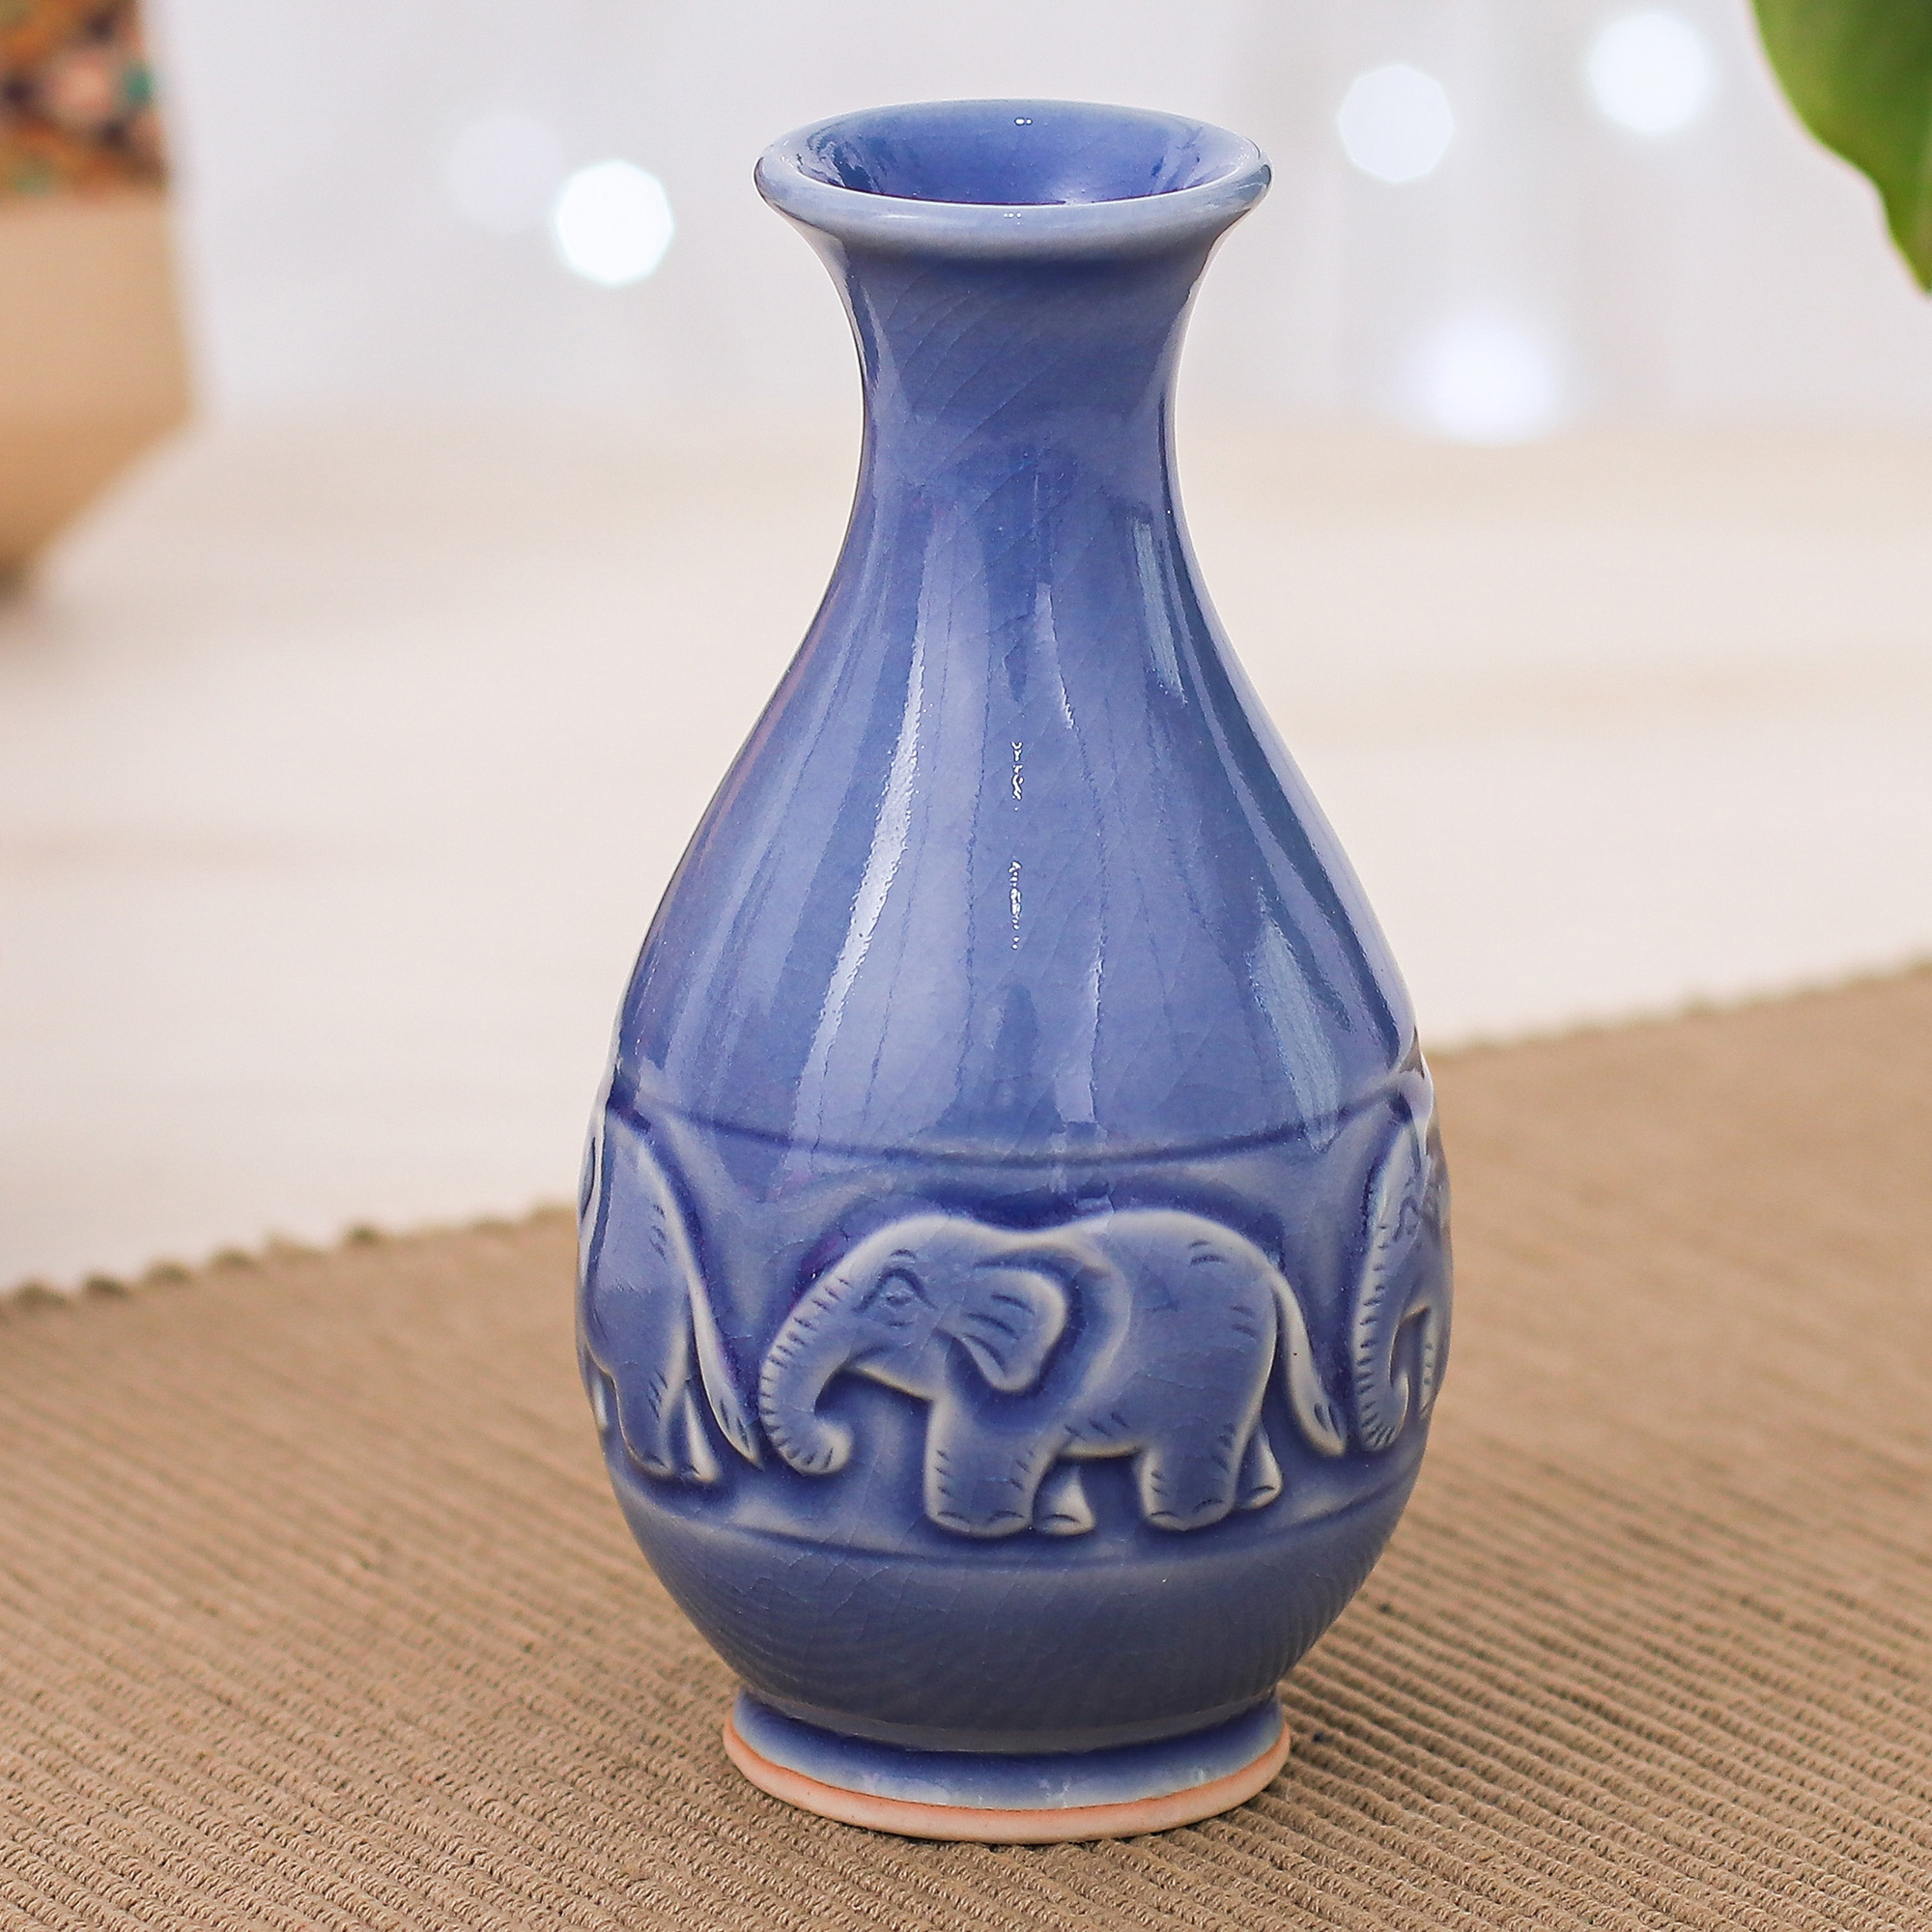 Handmade Elephant Texture Celadon Ceramic Salt and Pepper Shaker